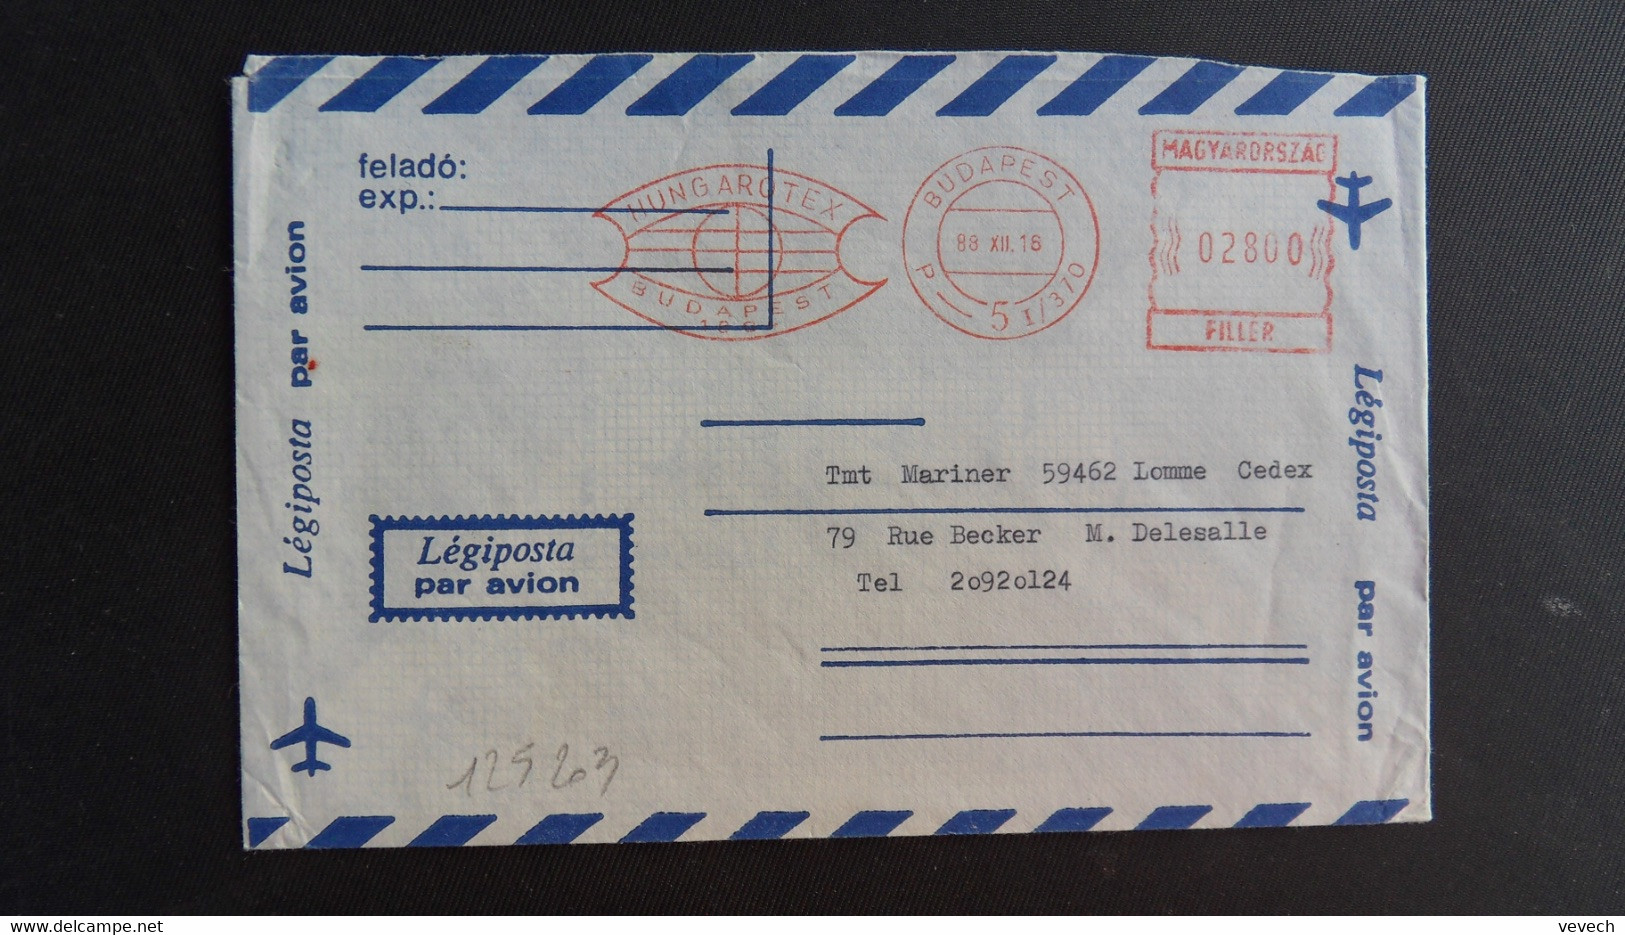 LETTRE Par Avion Pour La FRANCE EMA à 02800 Du 89 XII 16 BUDAPEST + HUNGAROTEX - Cartas & Documentos